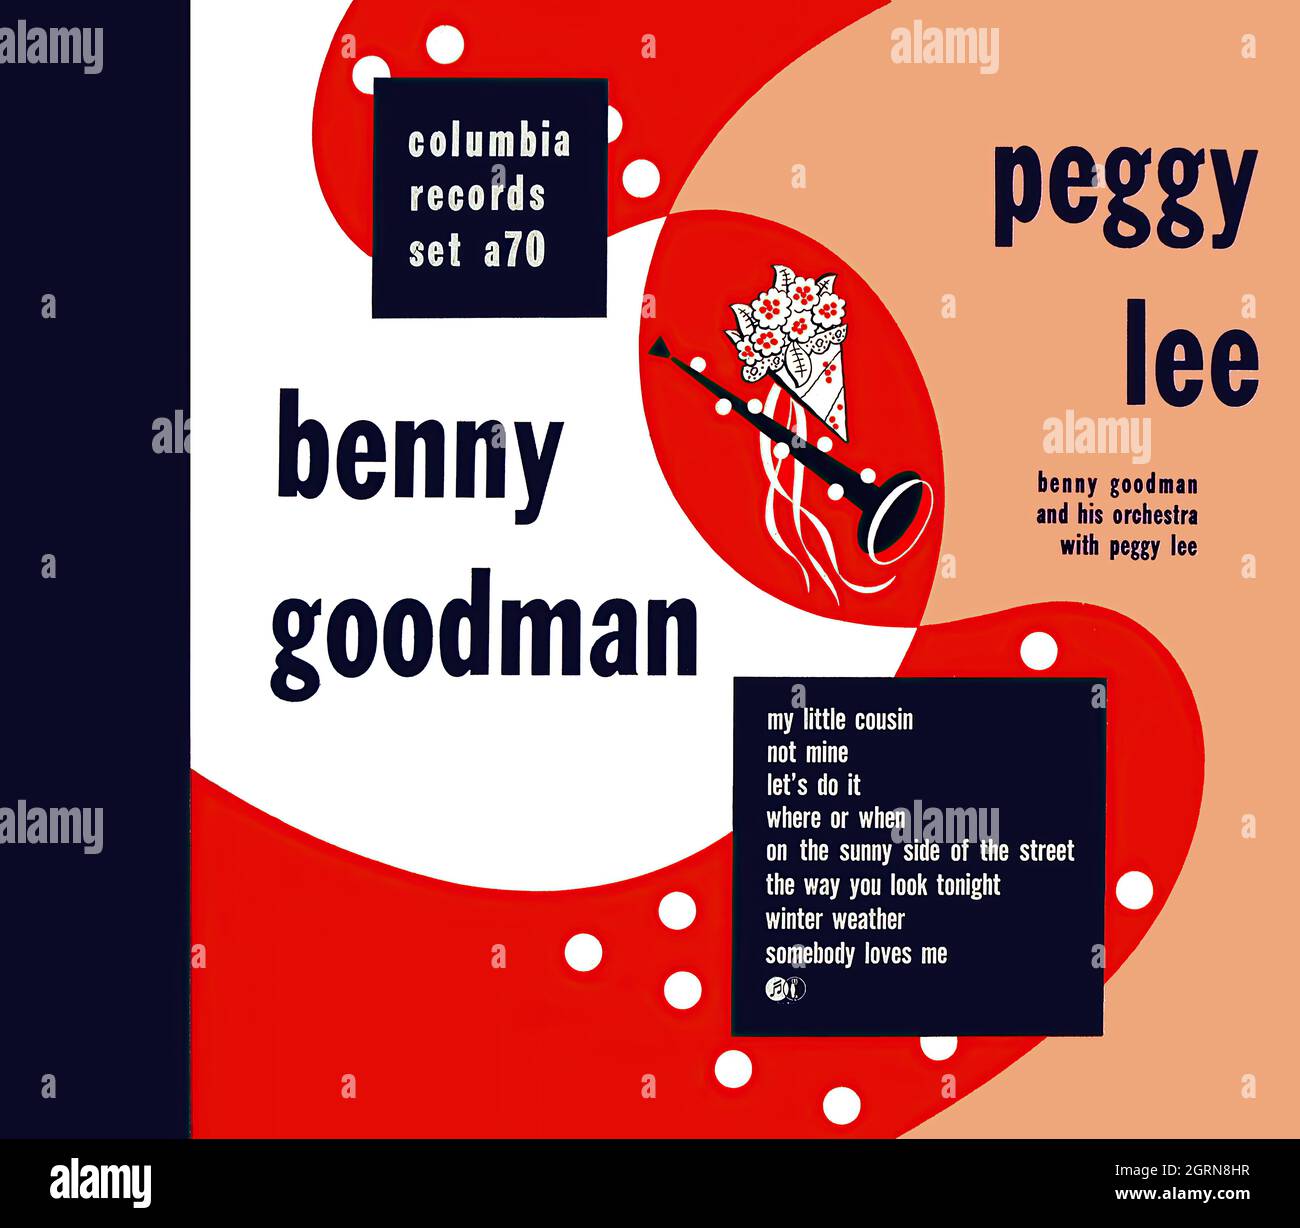 Benny Goodman & Peggy Lee -  Album 1950s - Vintage vinyl 78 rpm record Stock Photo